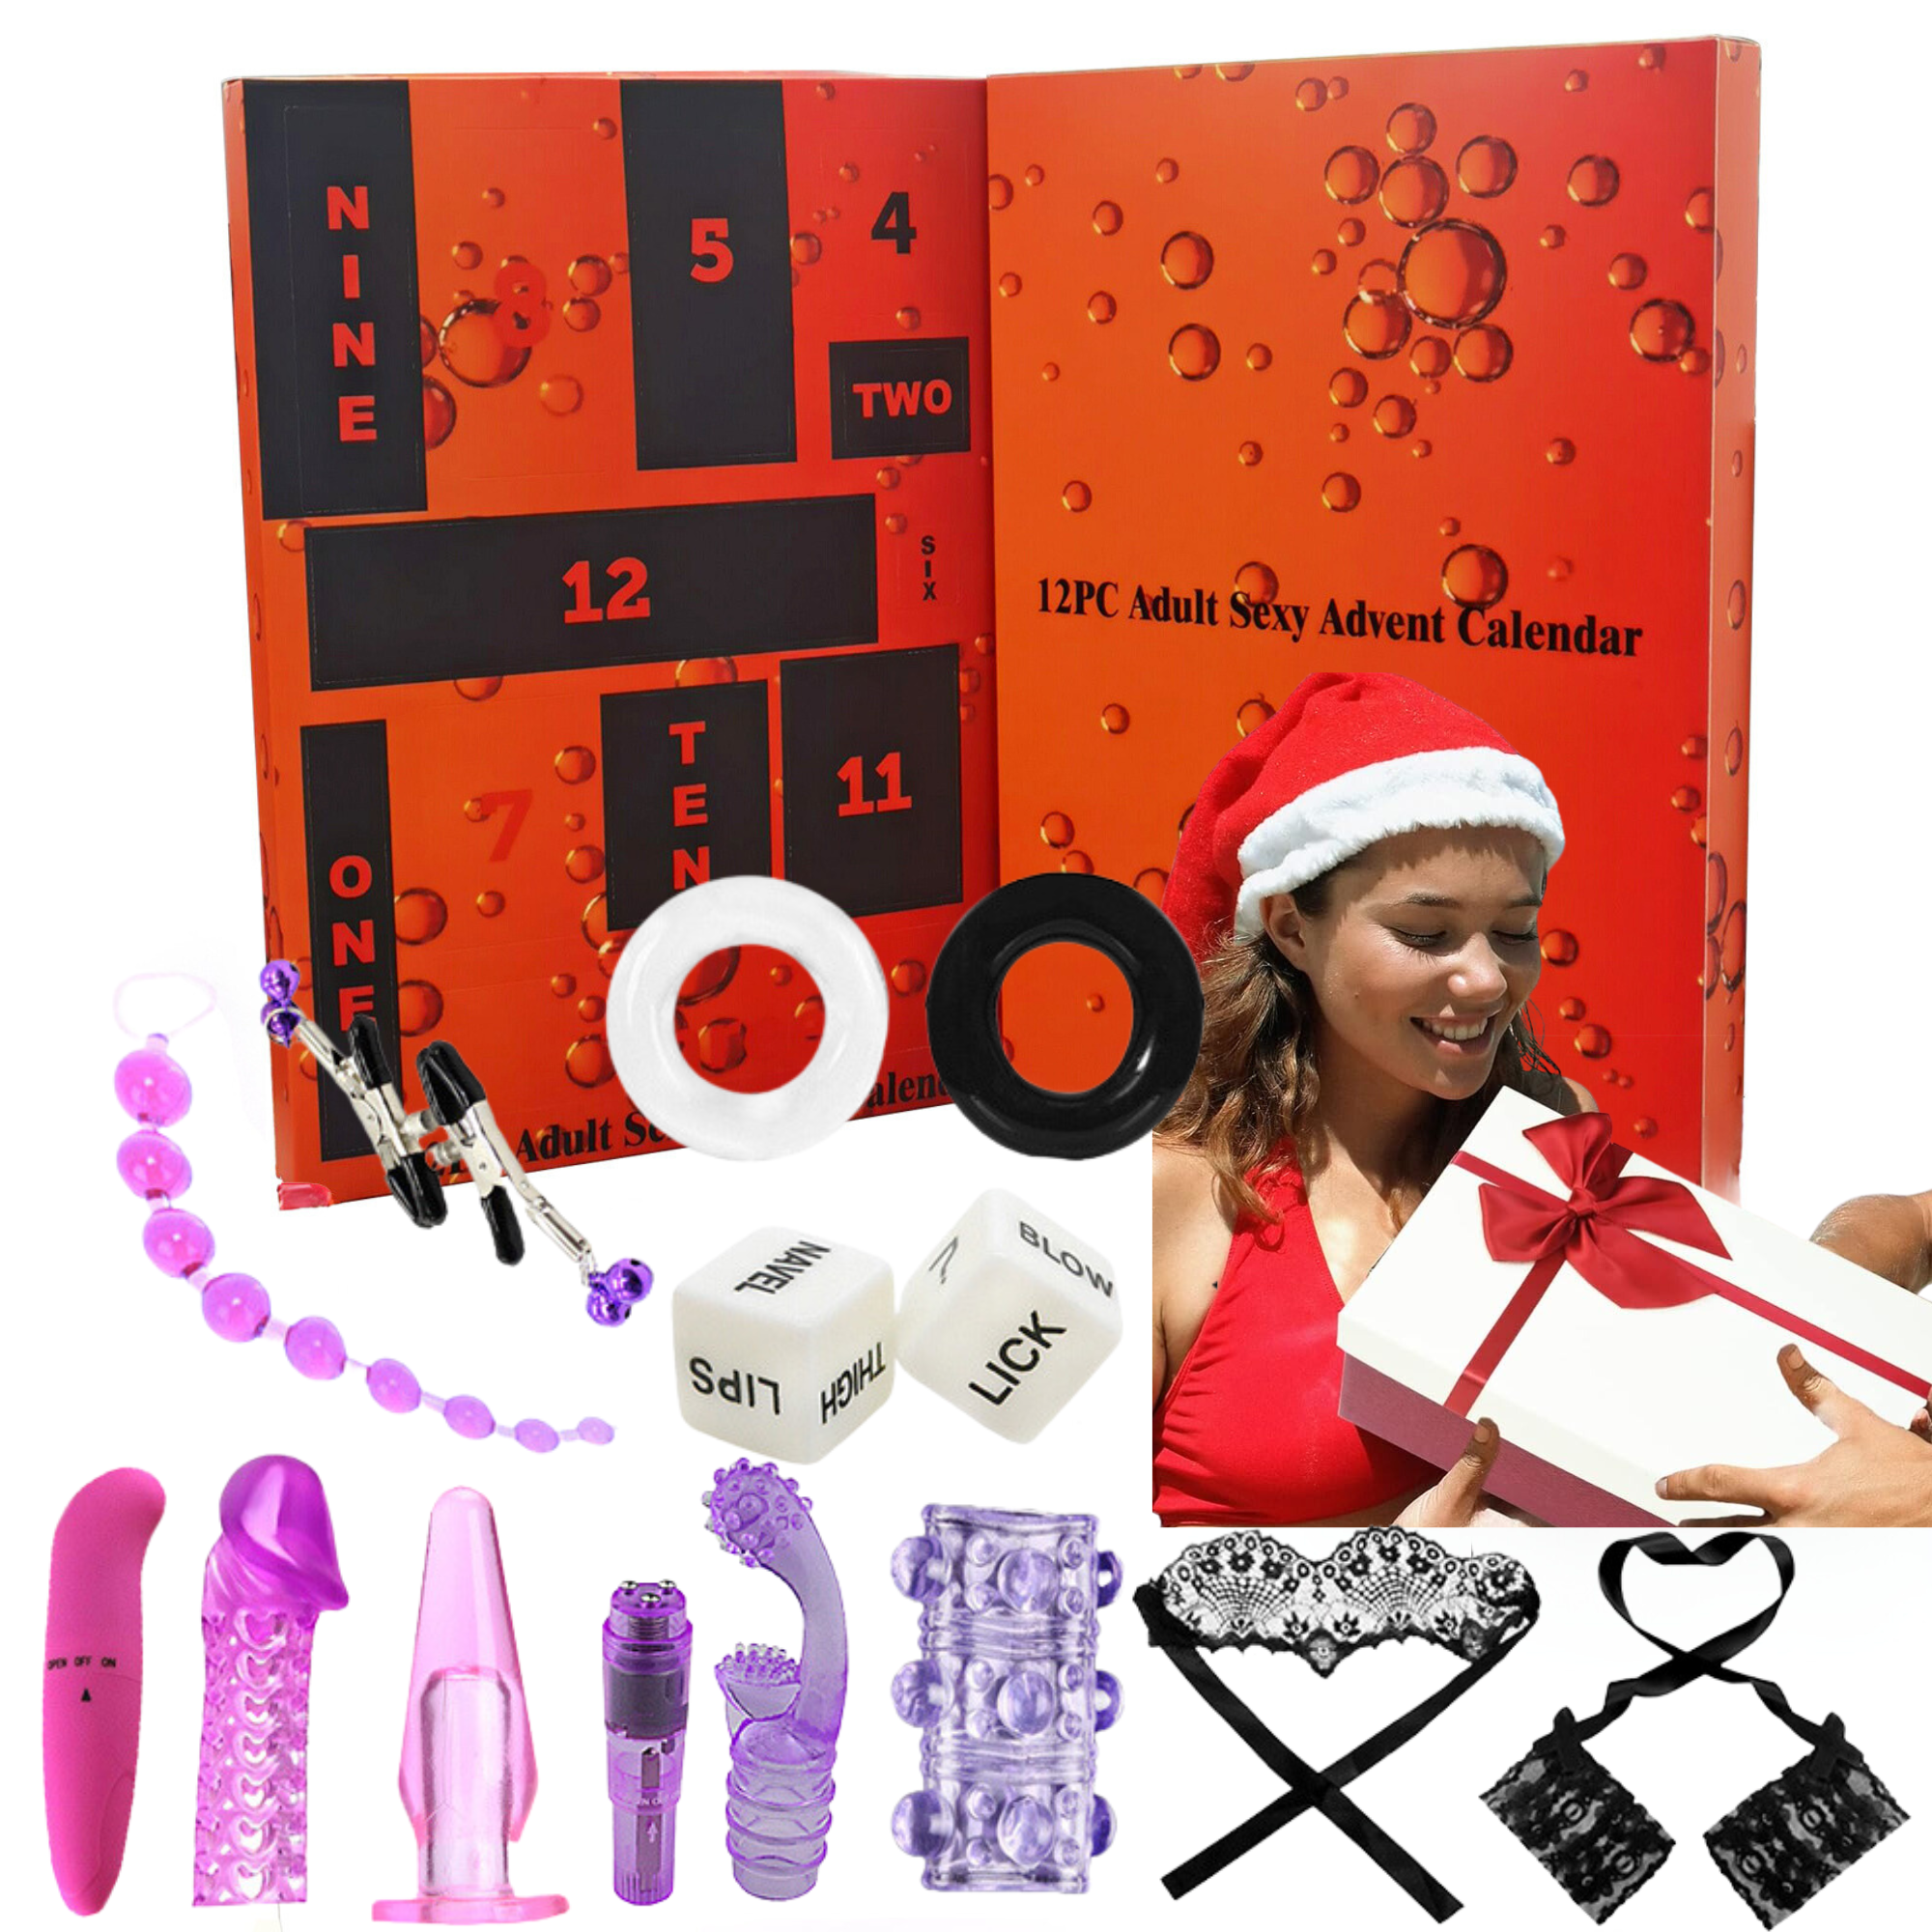 5Advent Calendars - 12 Days Christmas Couples Adult Sex Toy Set Advent Calendar (12pc Each Box)|GCAPSET001-AD|UK seller